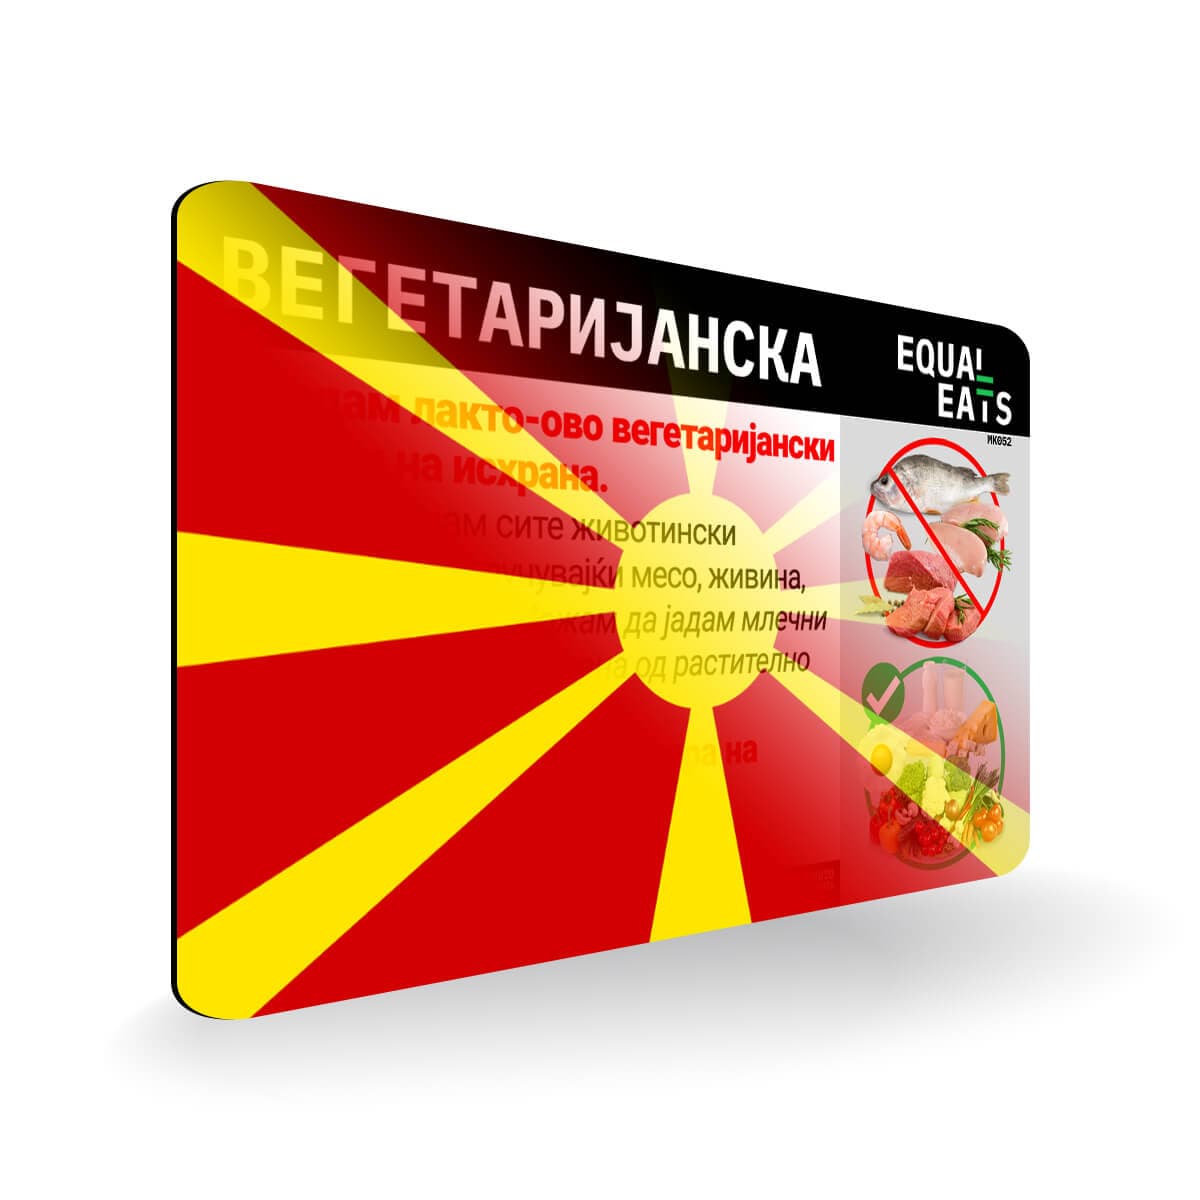 Lacto Ovo Vegetarian Diet in Macedonian. Vegetarian Card for Macedonia